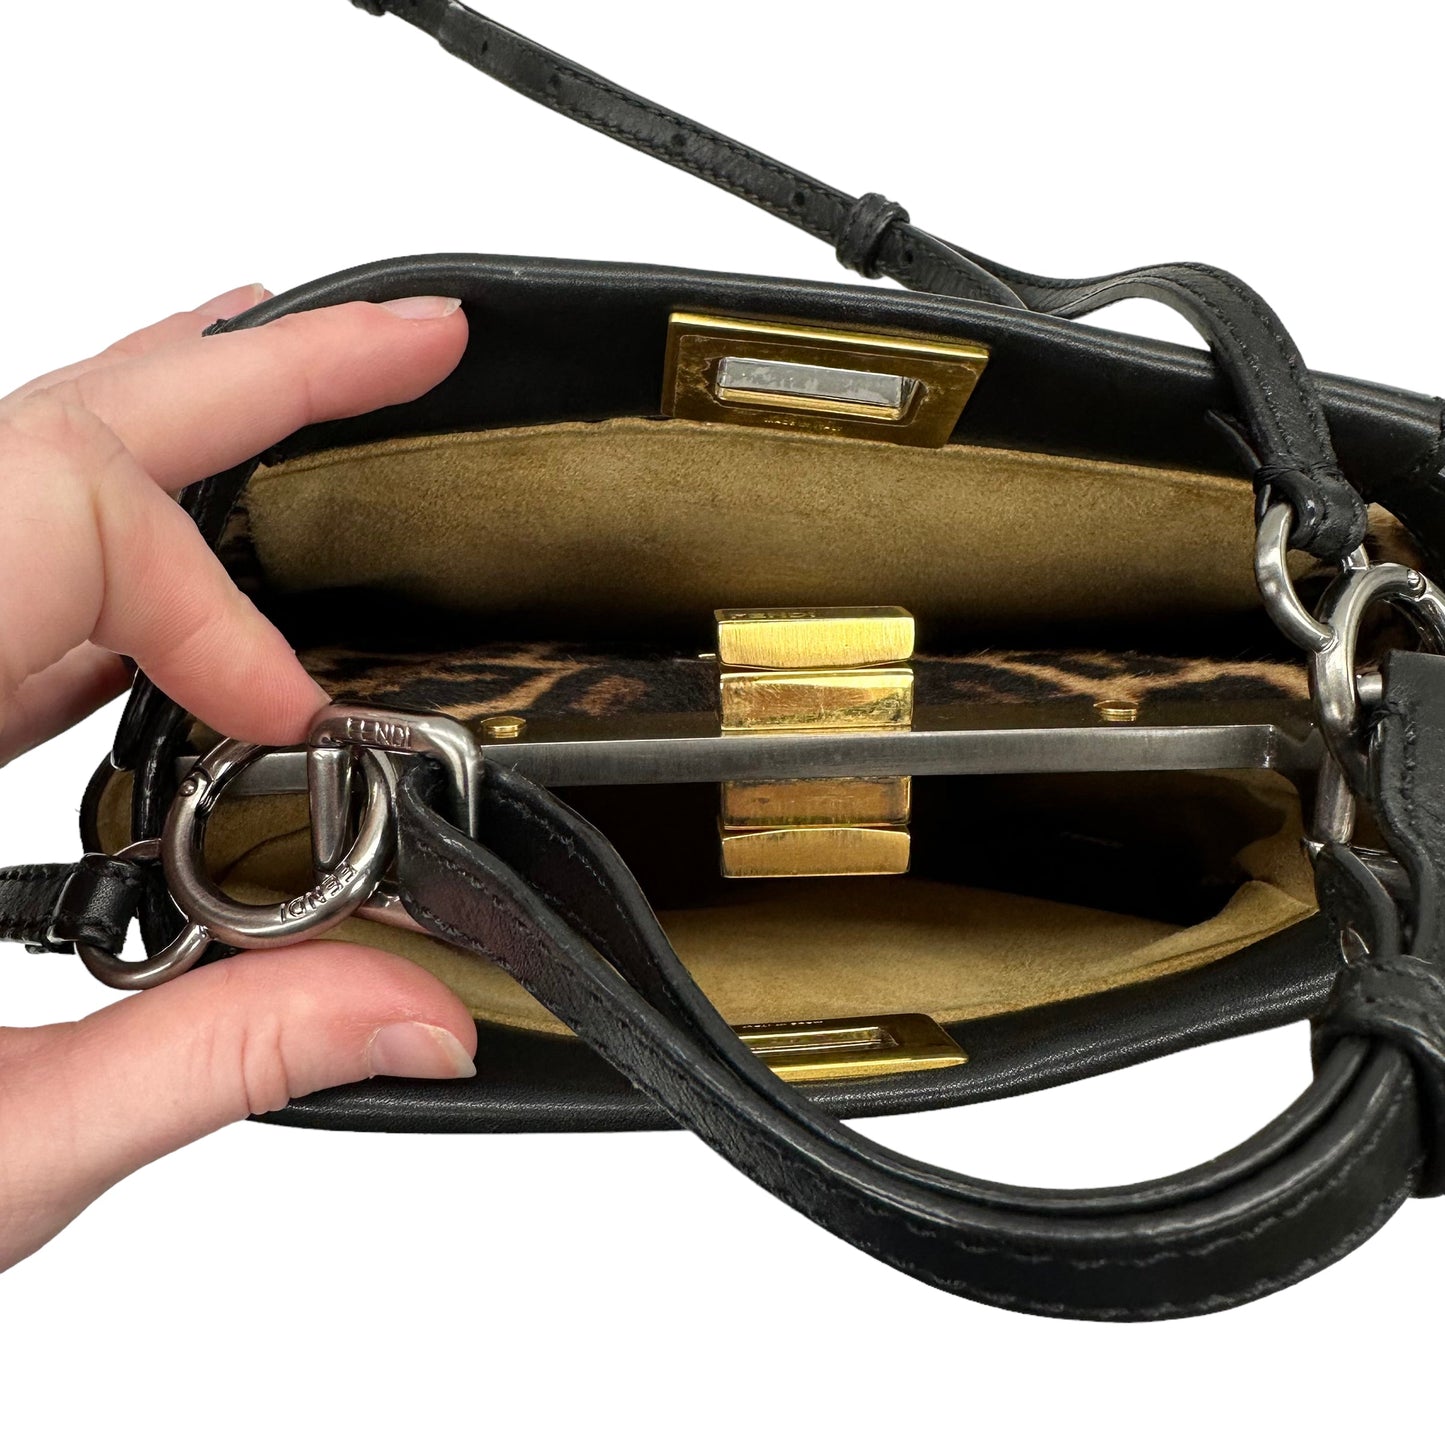 Handbag Luxury Designer By Fendi  Size: Small